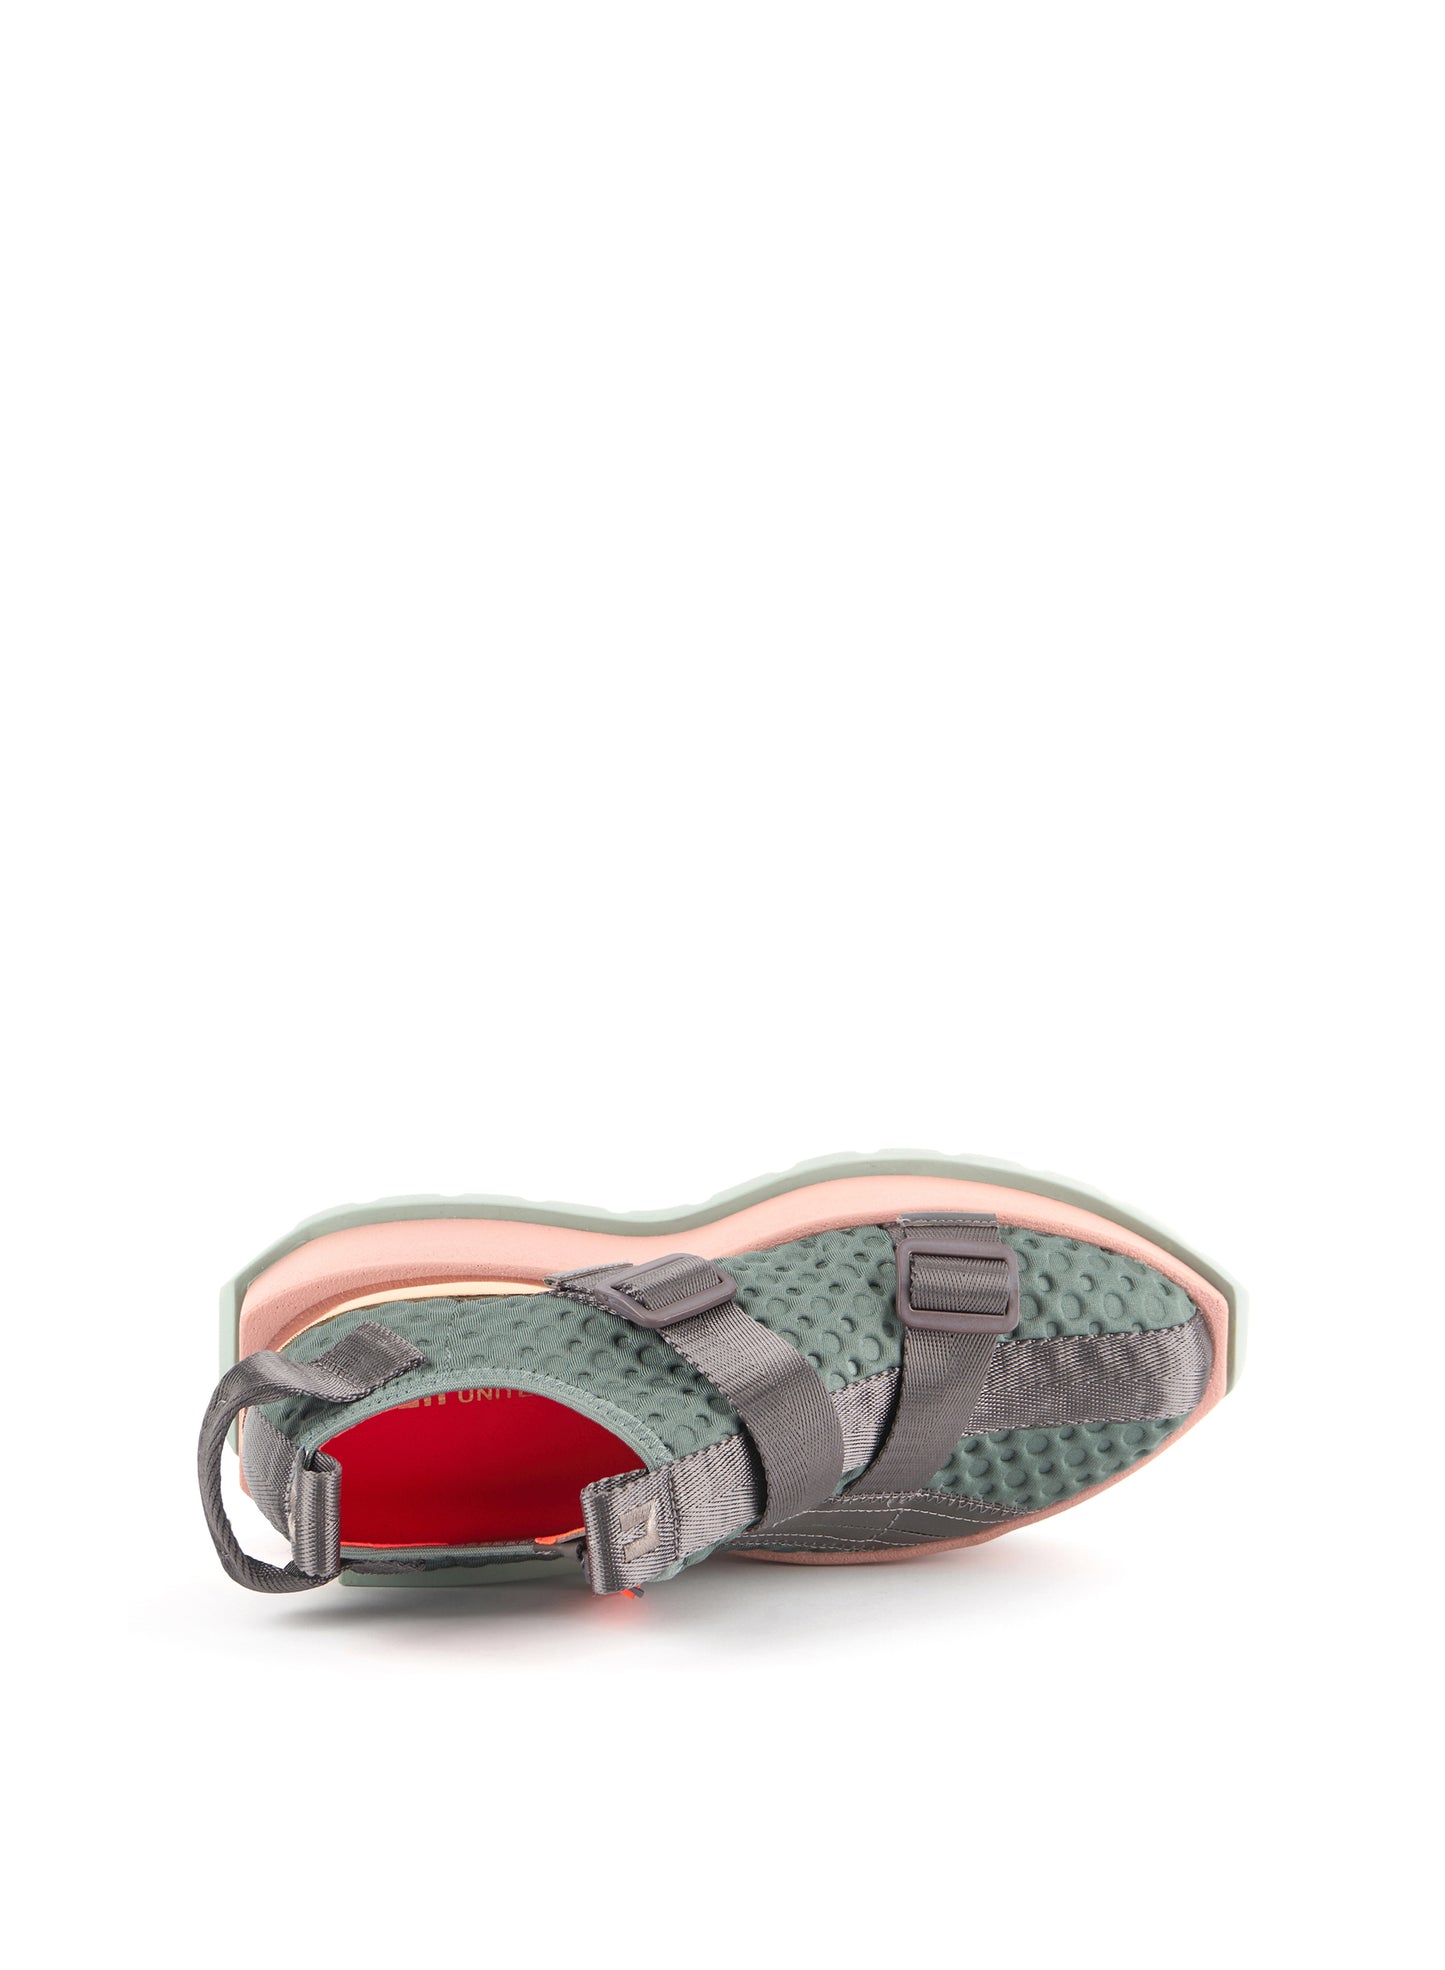 UNITED NUDE | أحذية رياضية للنساء | ROKO Y II SAGE | الرمادي والأخضر والوردي